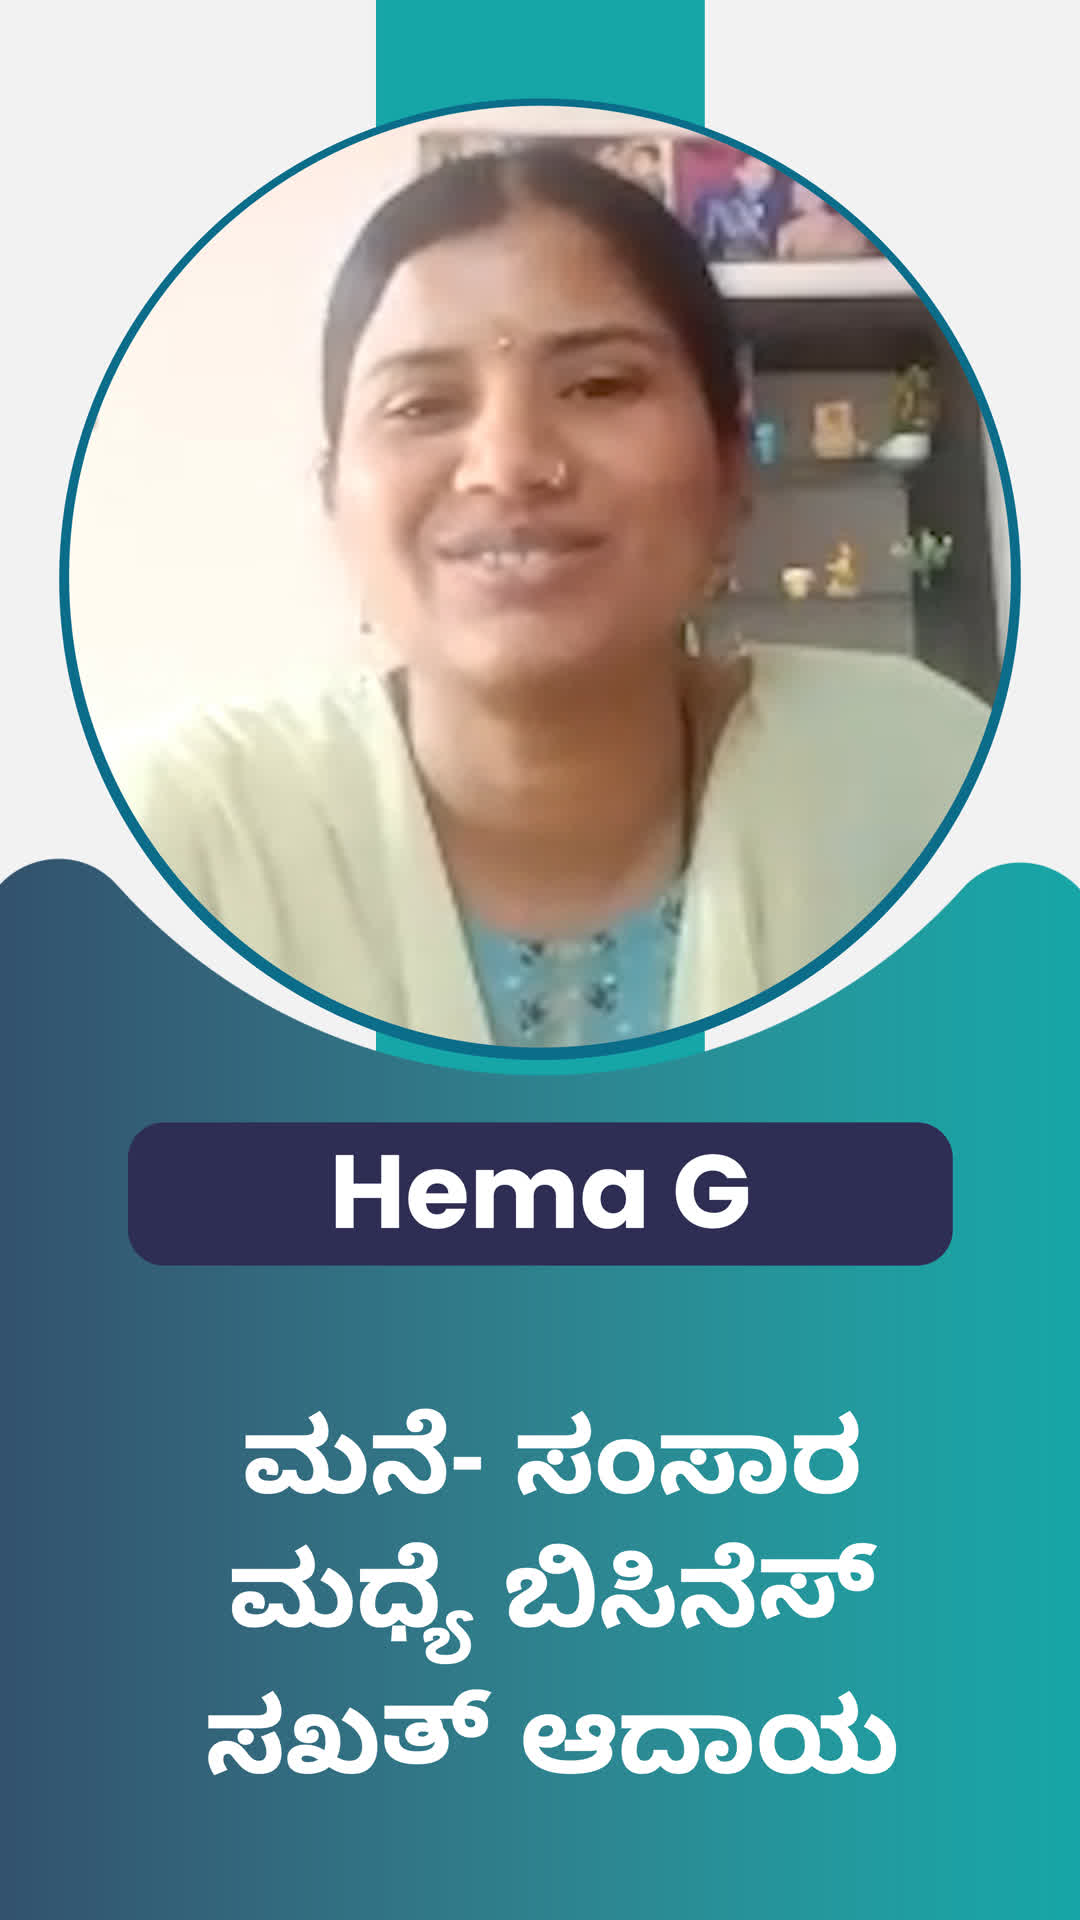 hema g's Honest Review of ffreedom app - Raichur ,Karnataka